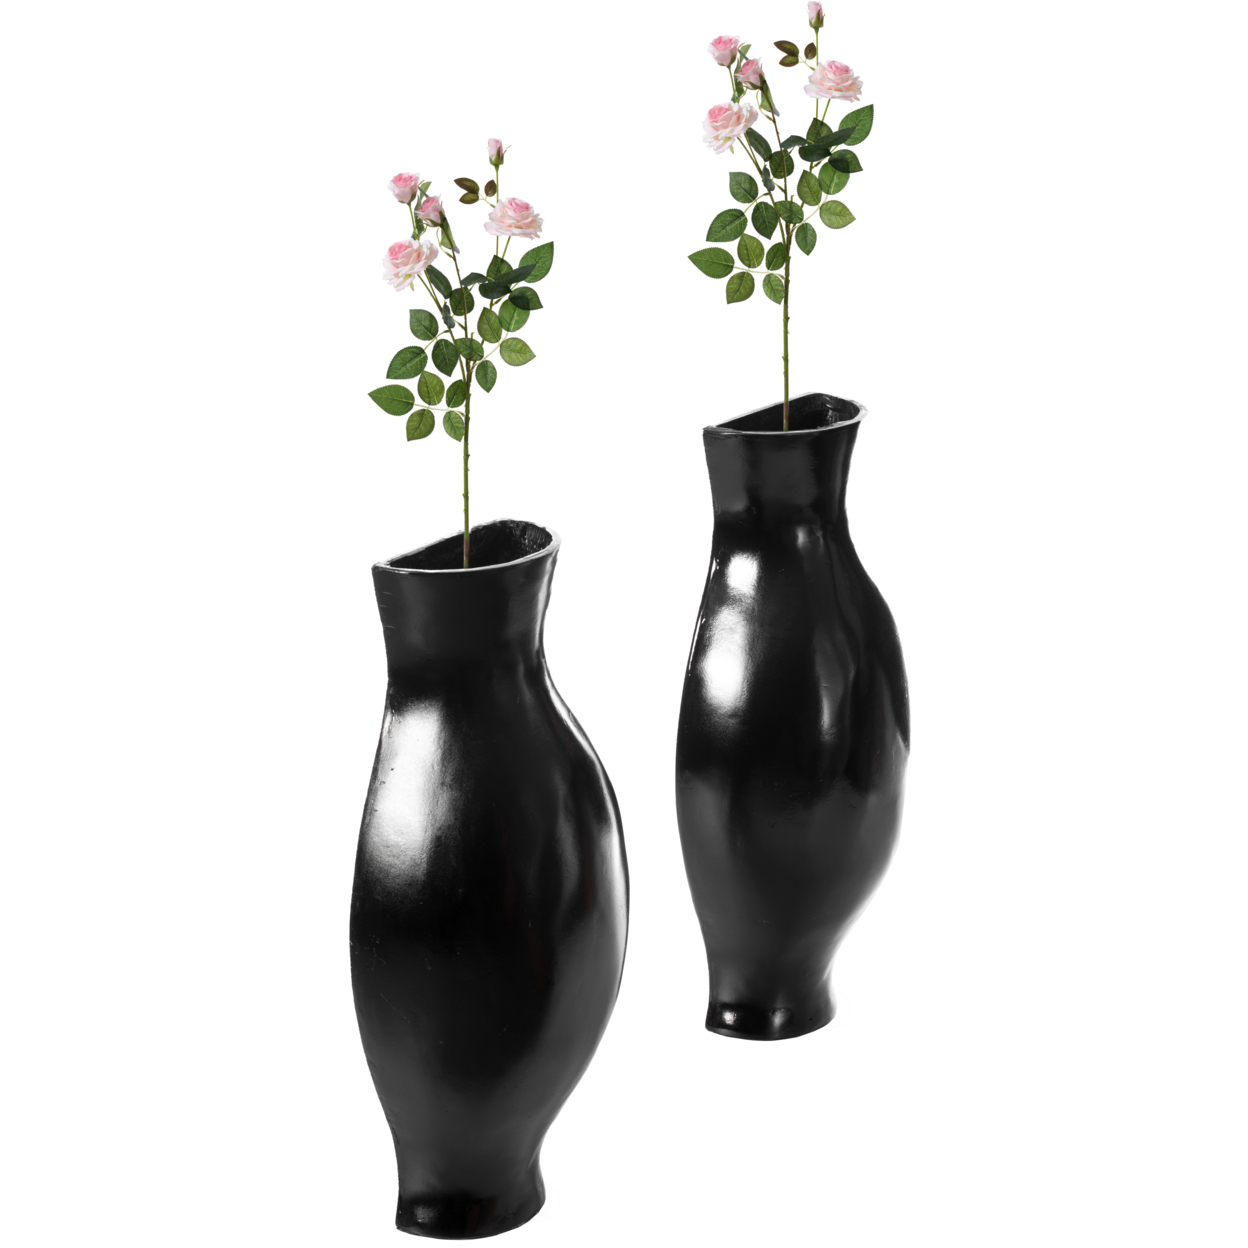 Tall Narrow Vase, Sleek Split Vase, Modern Floor Vase, Decorative Gift, Vase For Interior Design, 24.5 Inch Vase - Set Of 1 Black And 1 Whit